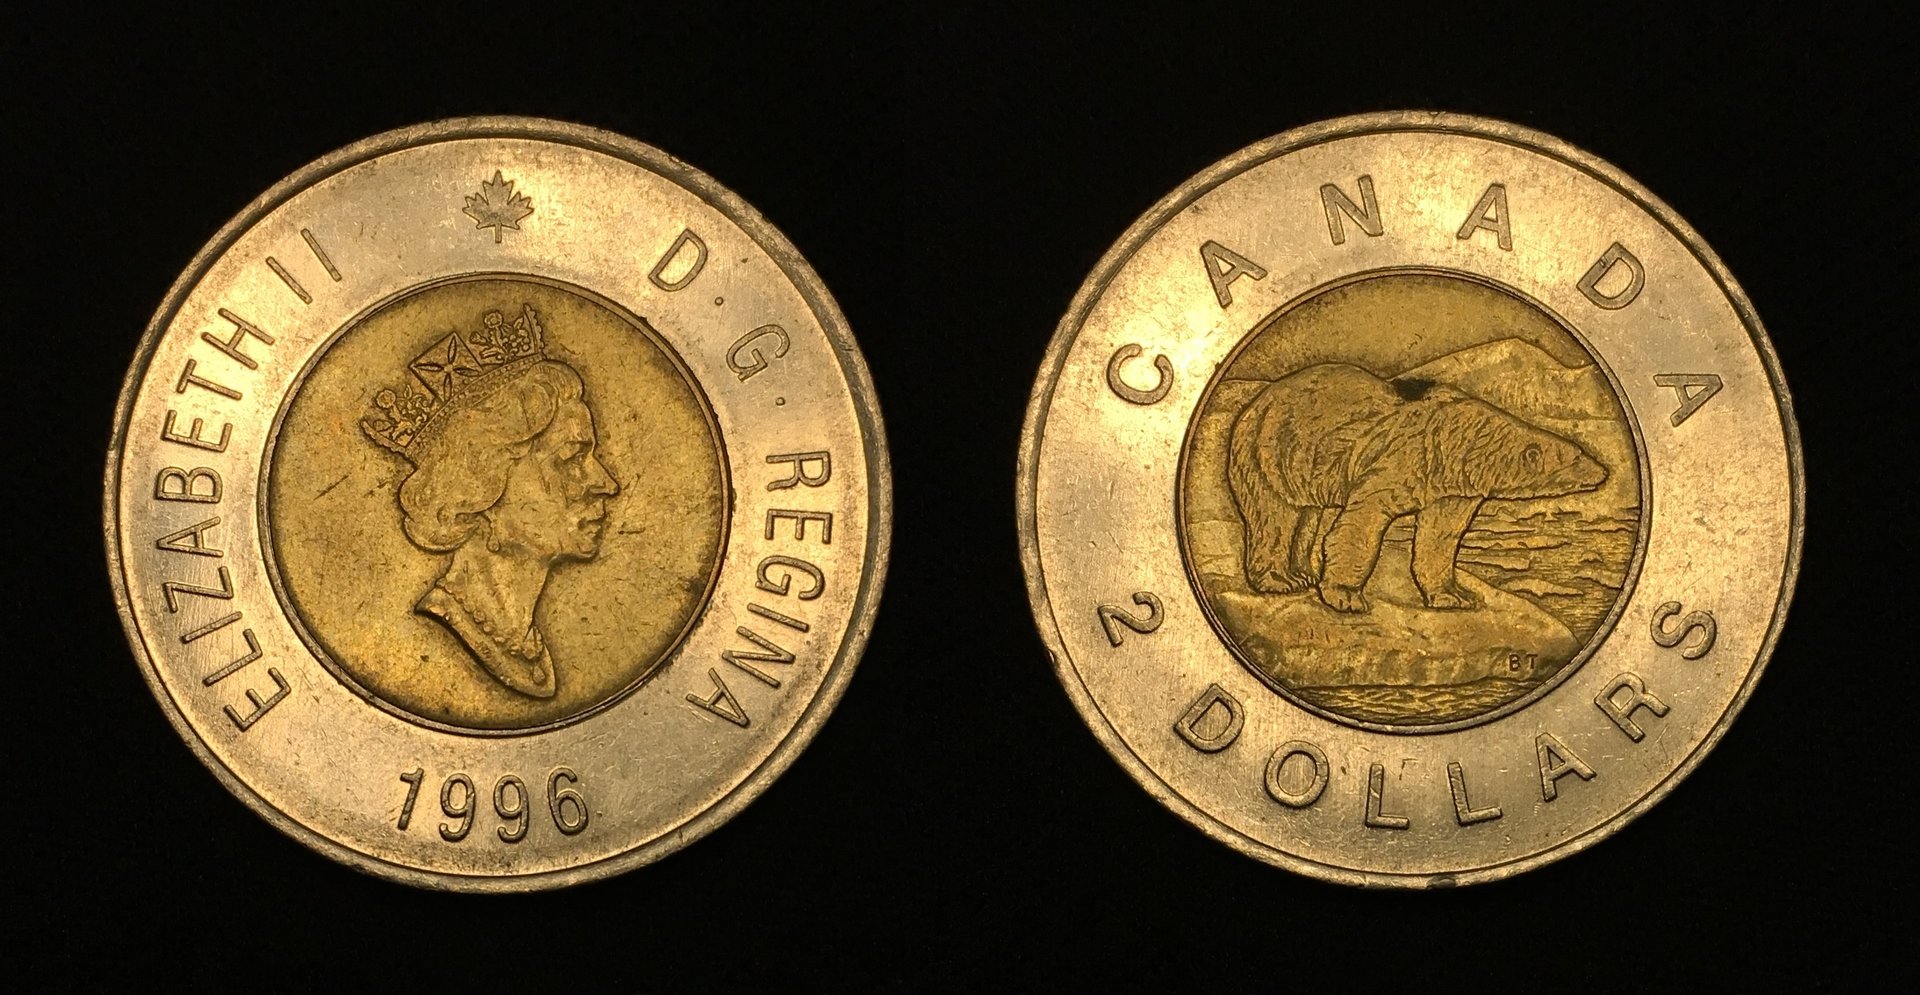 1996 CE 2 Dollars Combined.jpg